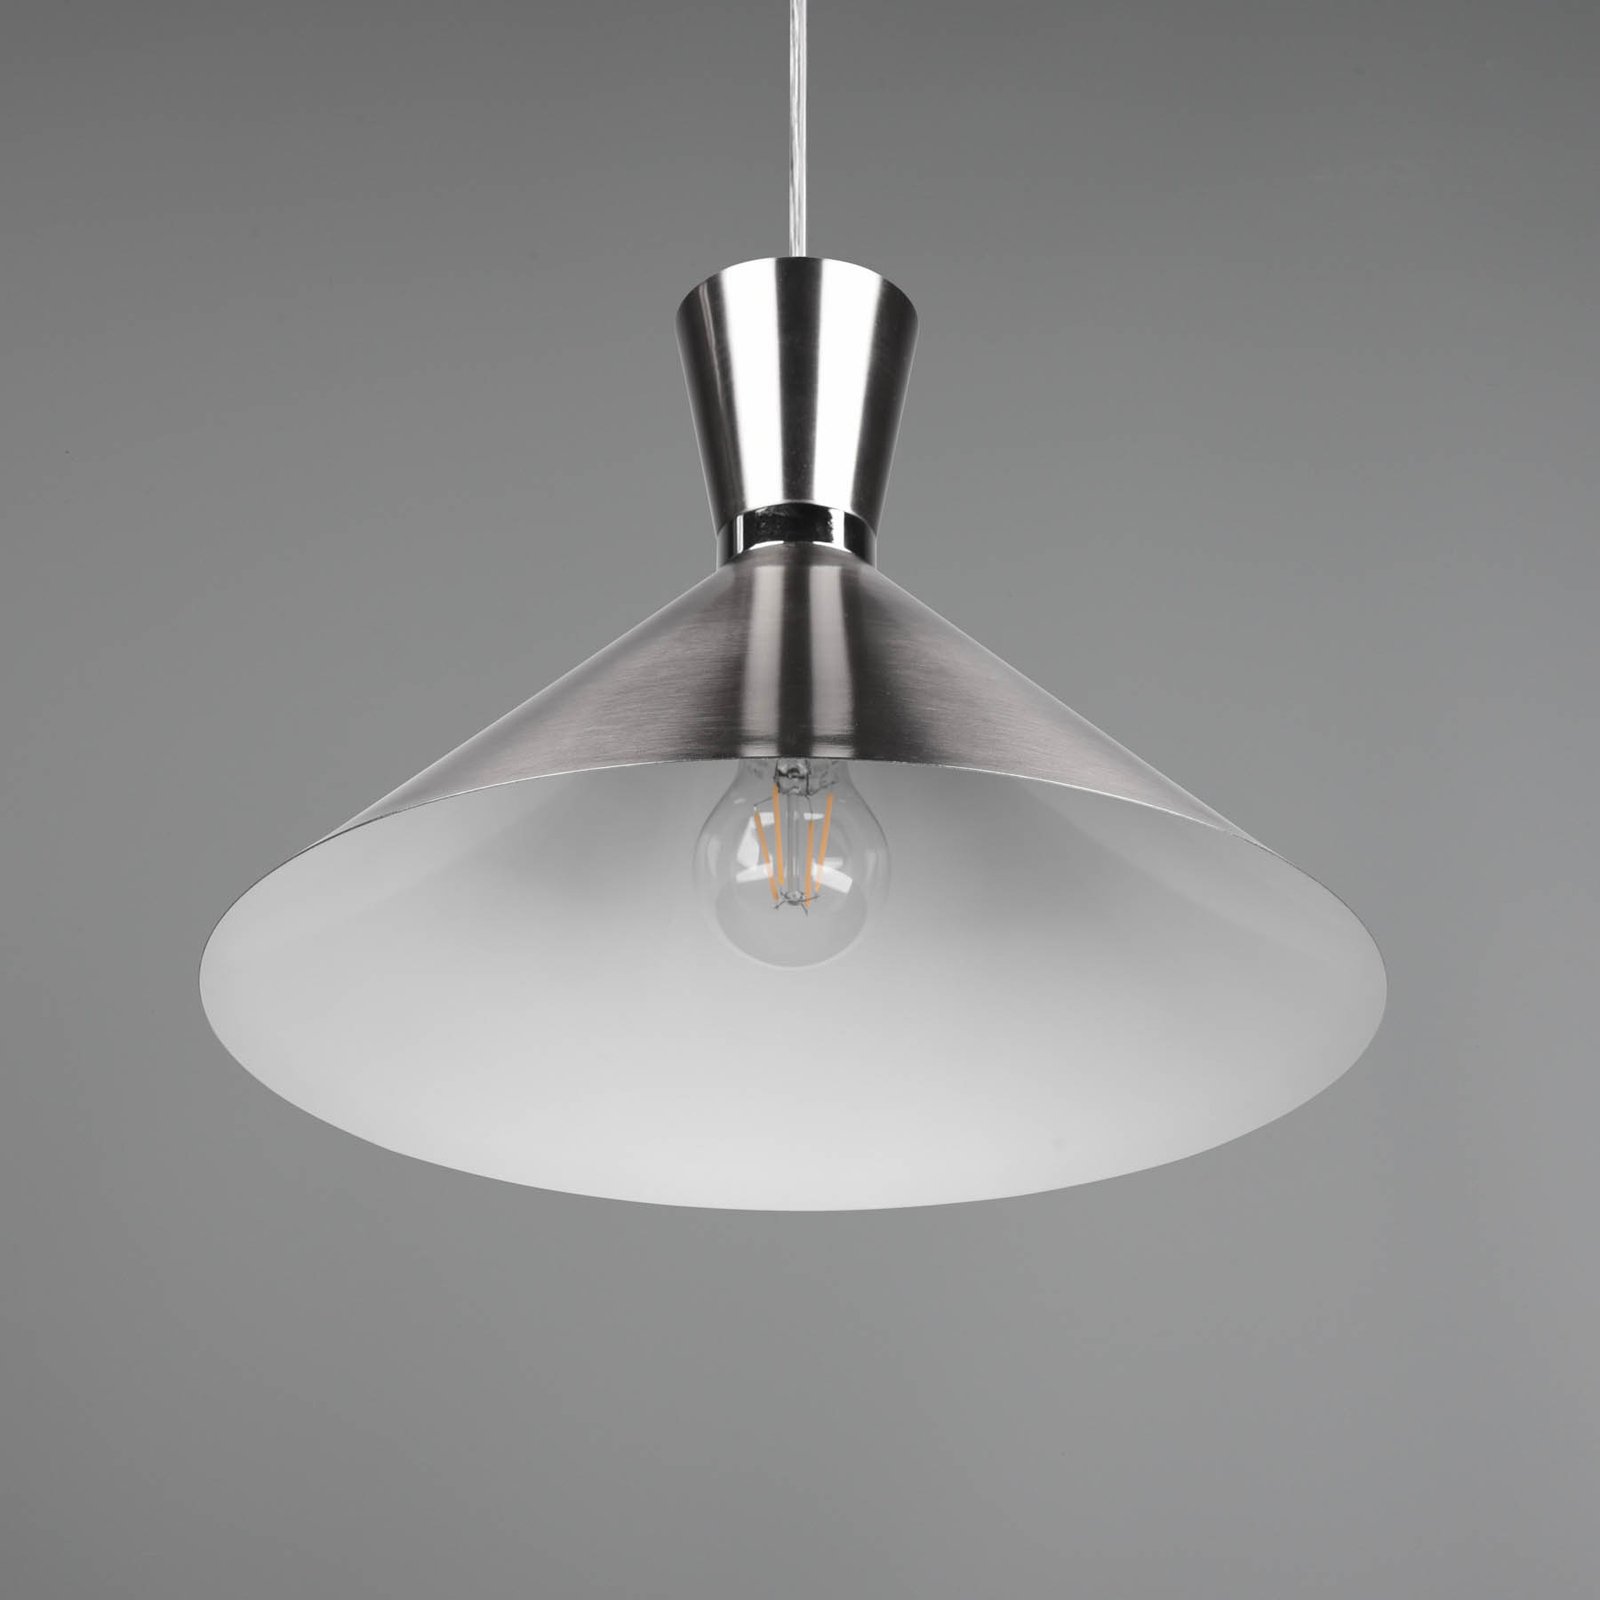 Enzo pendant light, one-bulb, Ø 35 cm, nickel